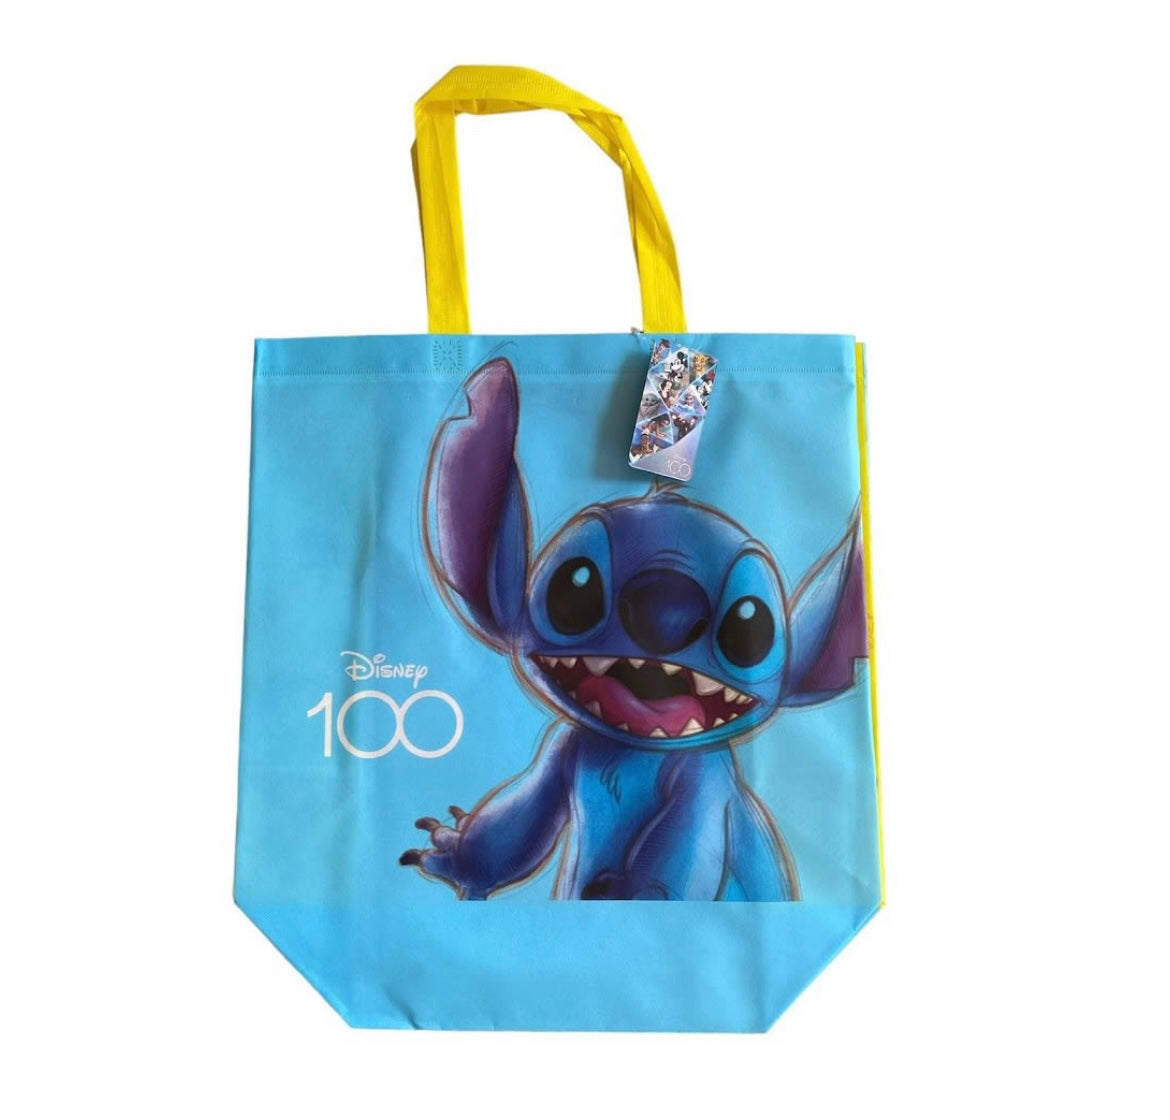 Bolsa Disney 100 años Stitch y simba